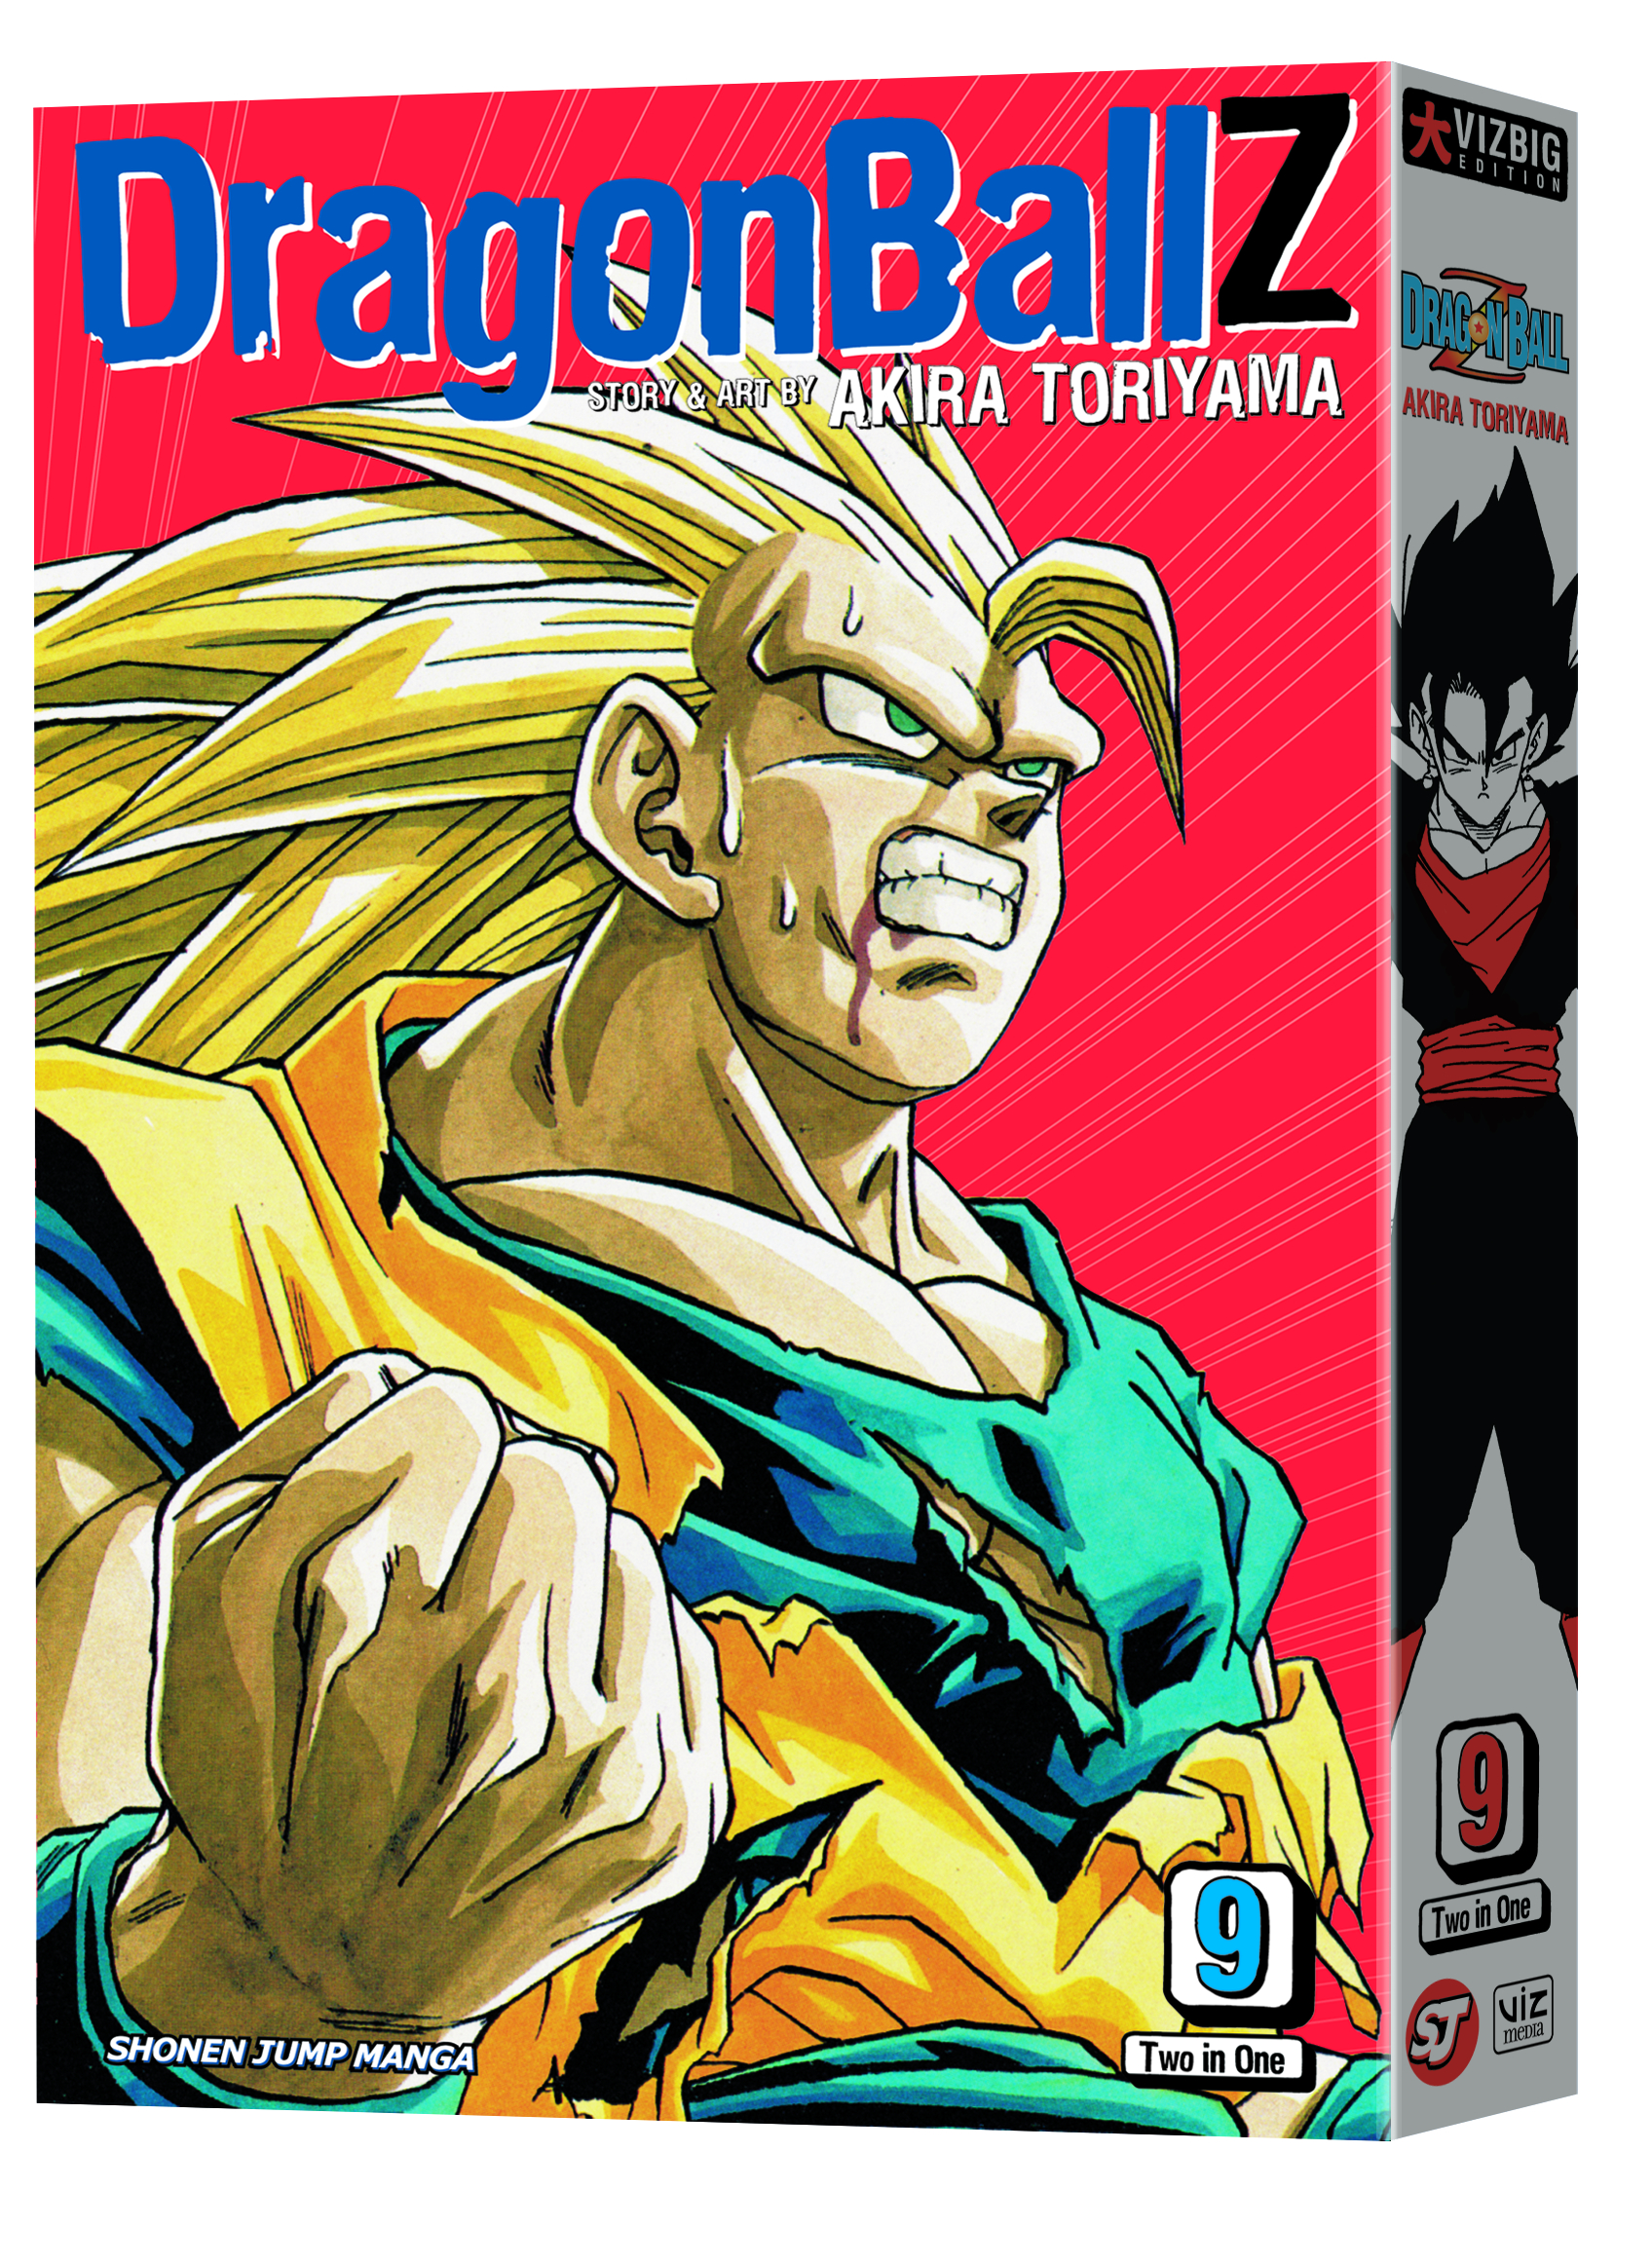 Dragon Ball Z (VIZBIG Edition), Vol. 9 by Toriyama, Akira